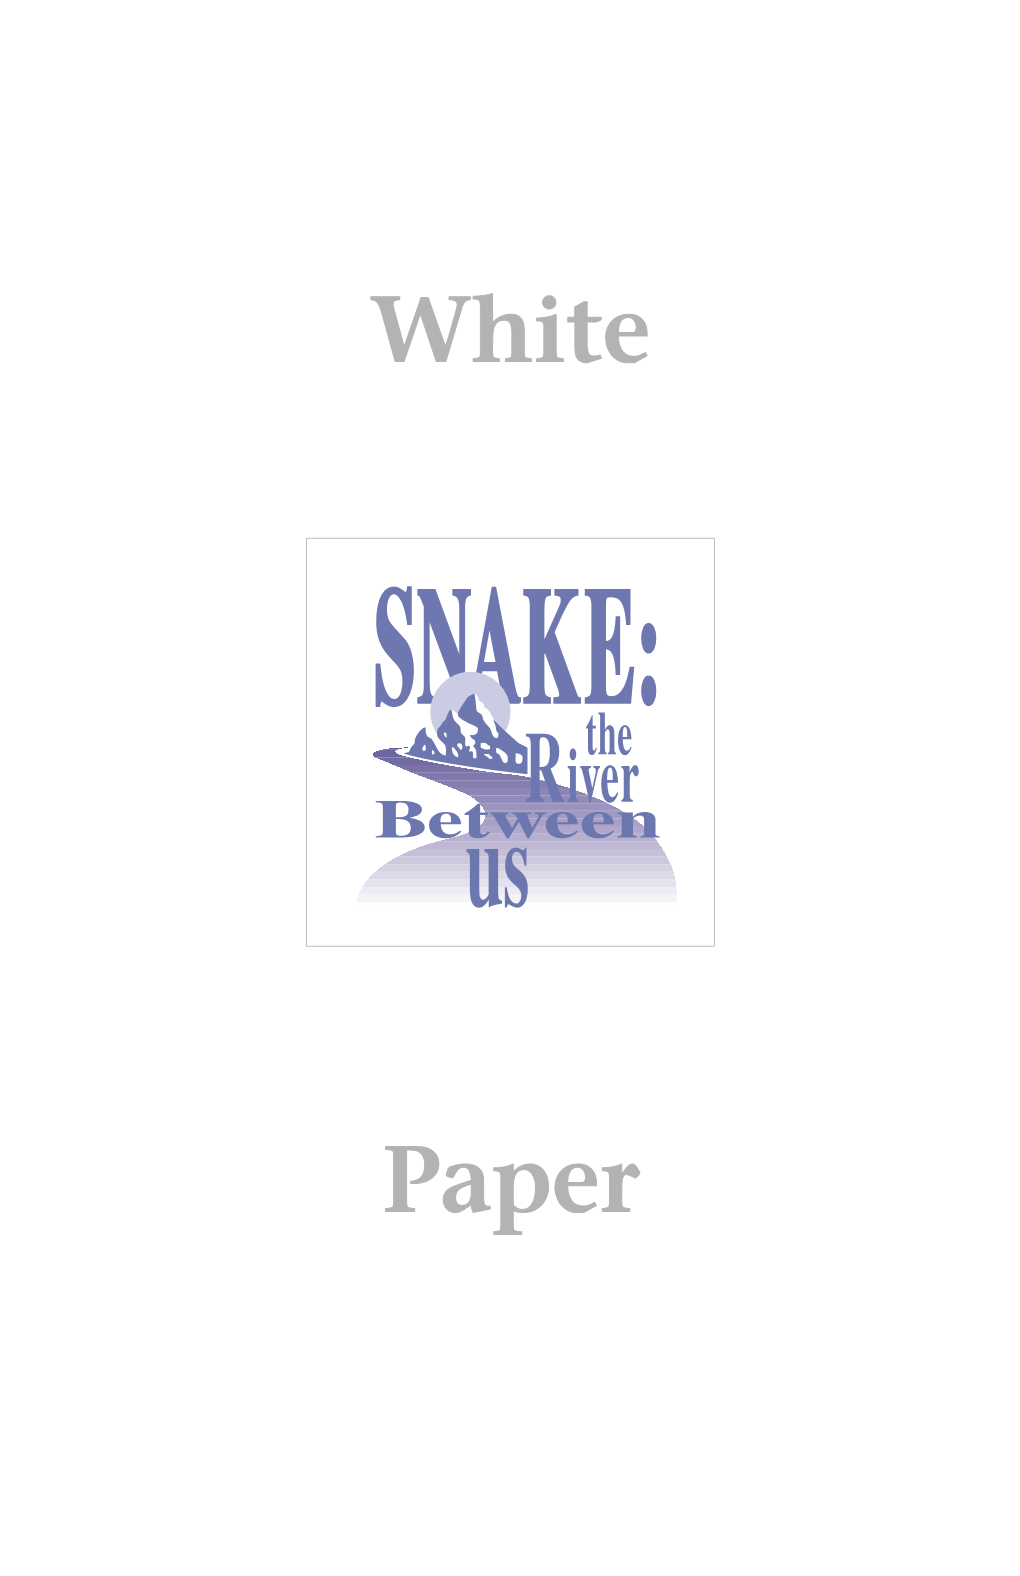 A White Paper on Snake